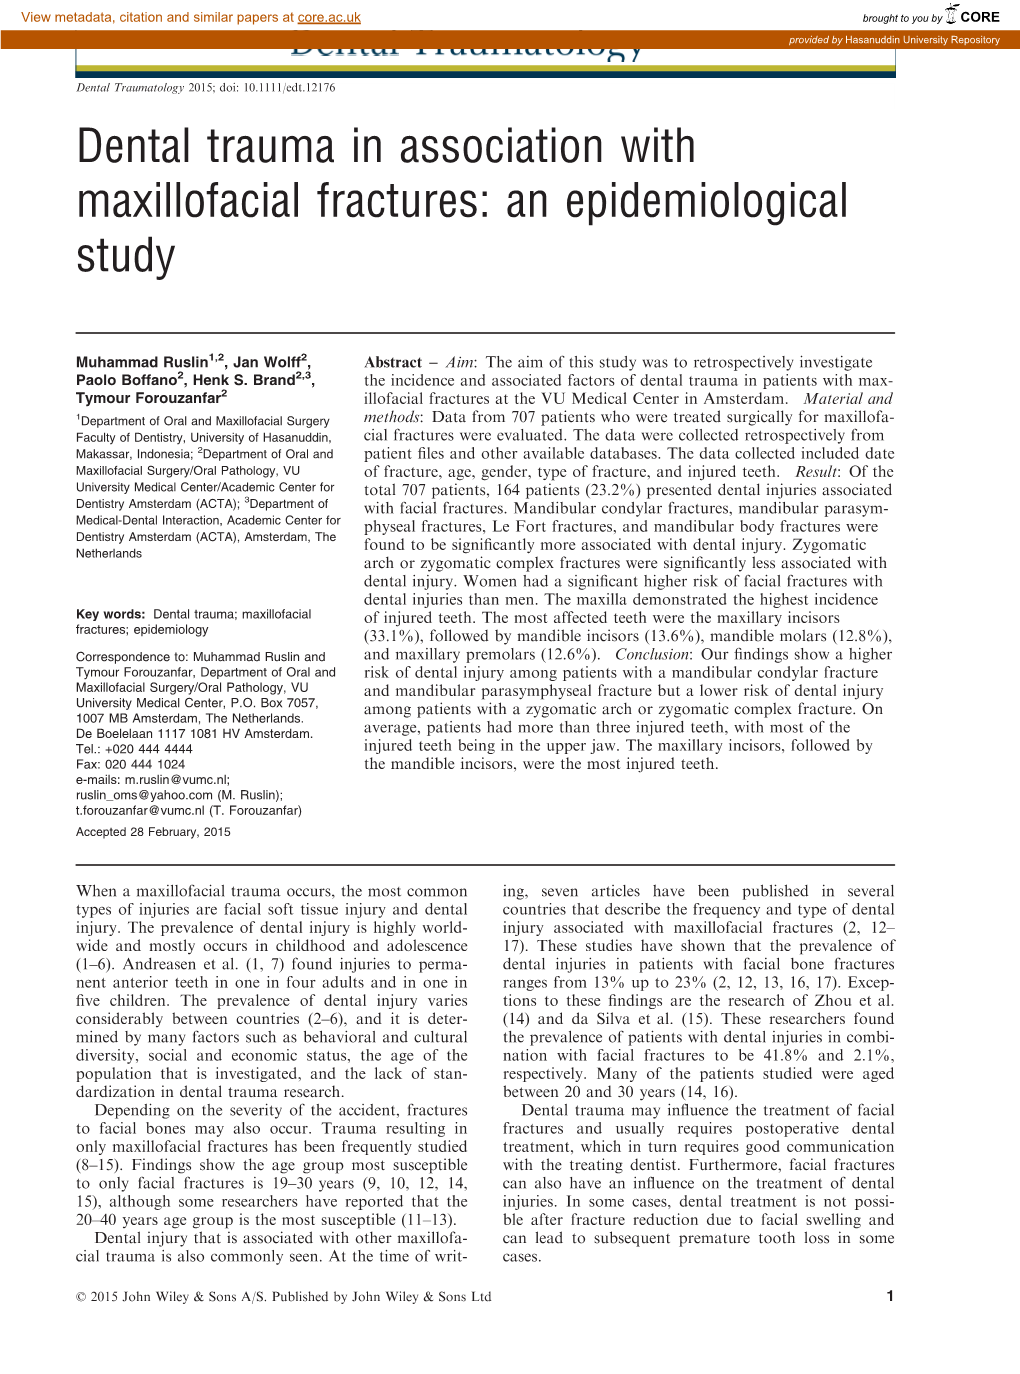 Dental Trauma in Association with Maxillofacial Fractures: an Epidemiological Study